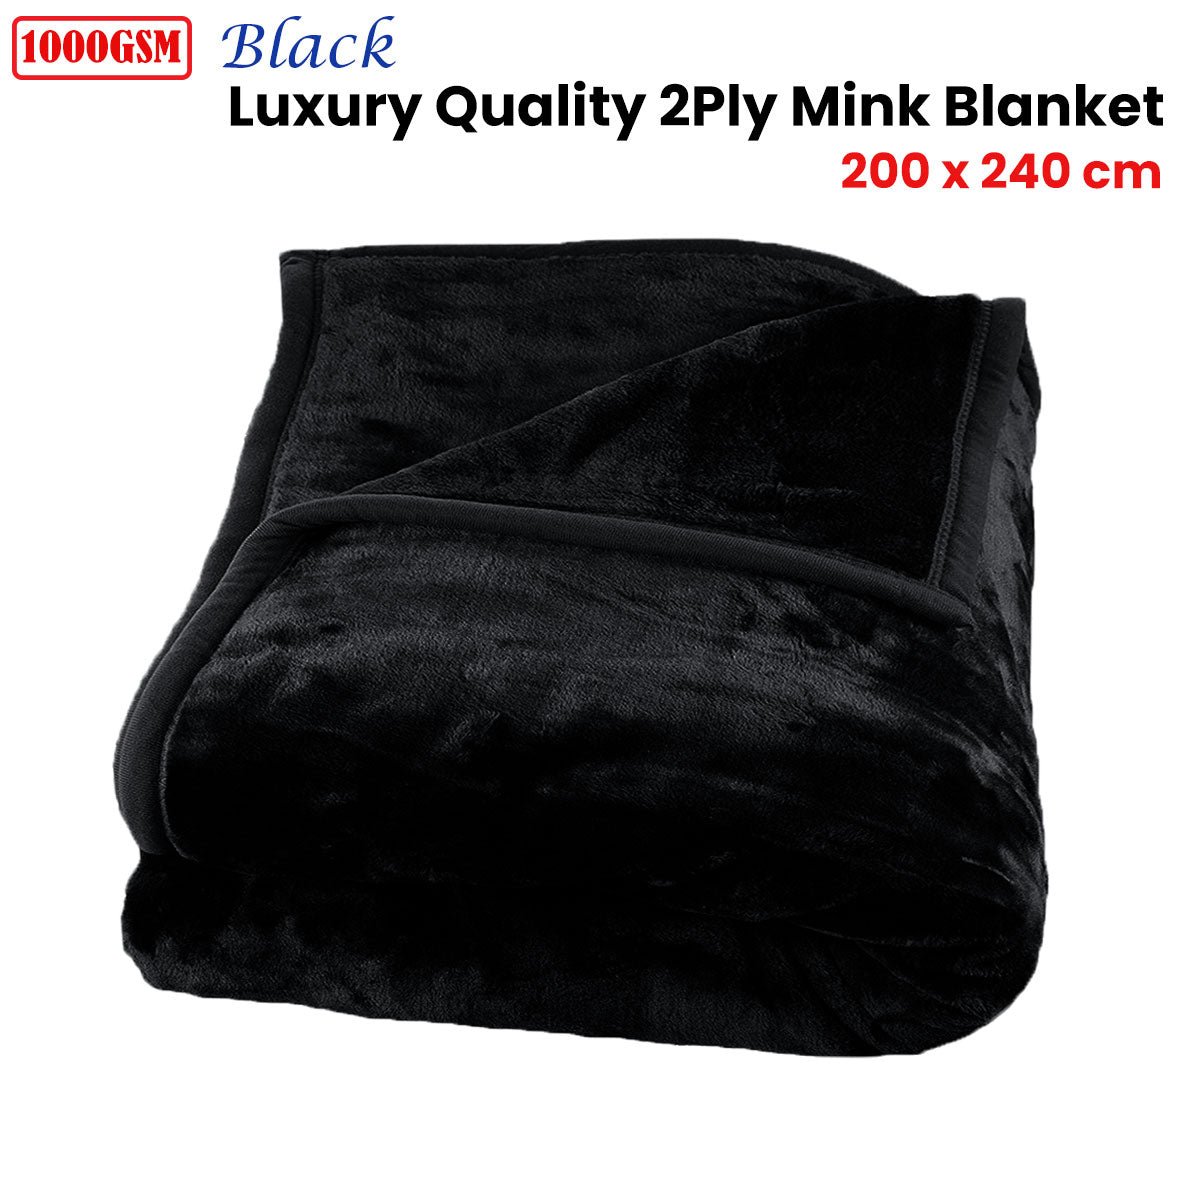 1000GSM Luxury Quality 2 Ply Mink Blanket Black 200 x 240 cm - BM House & Garden